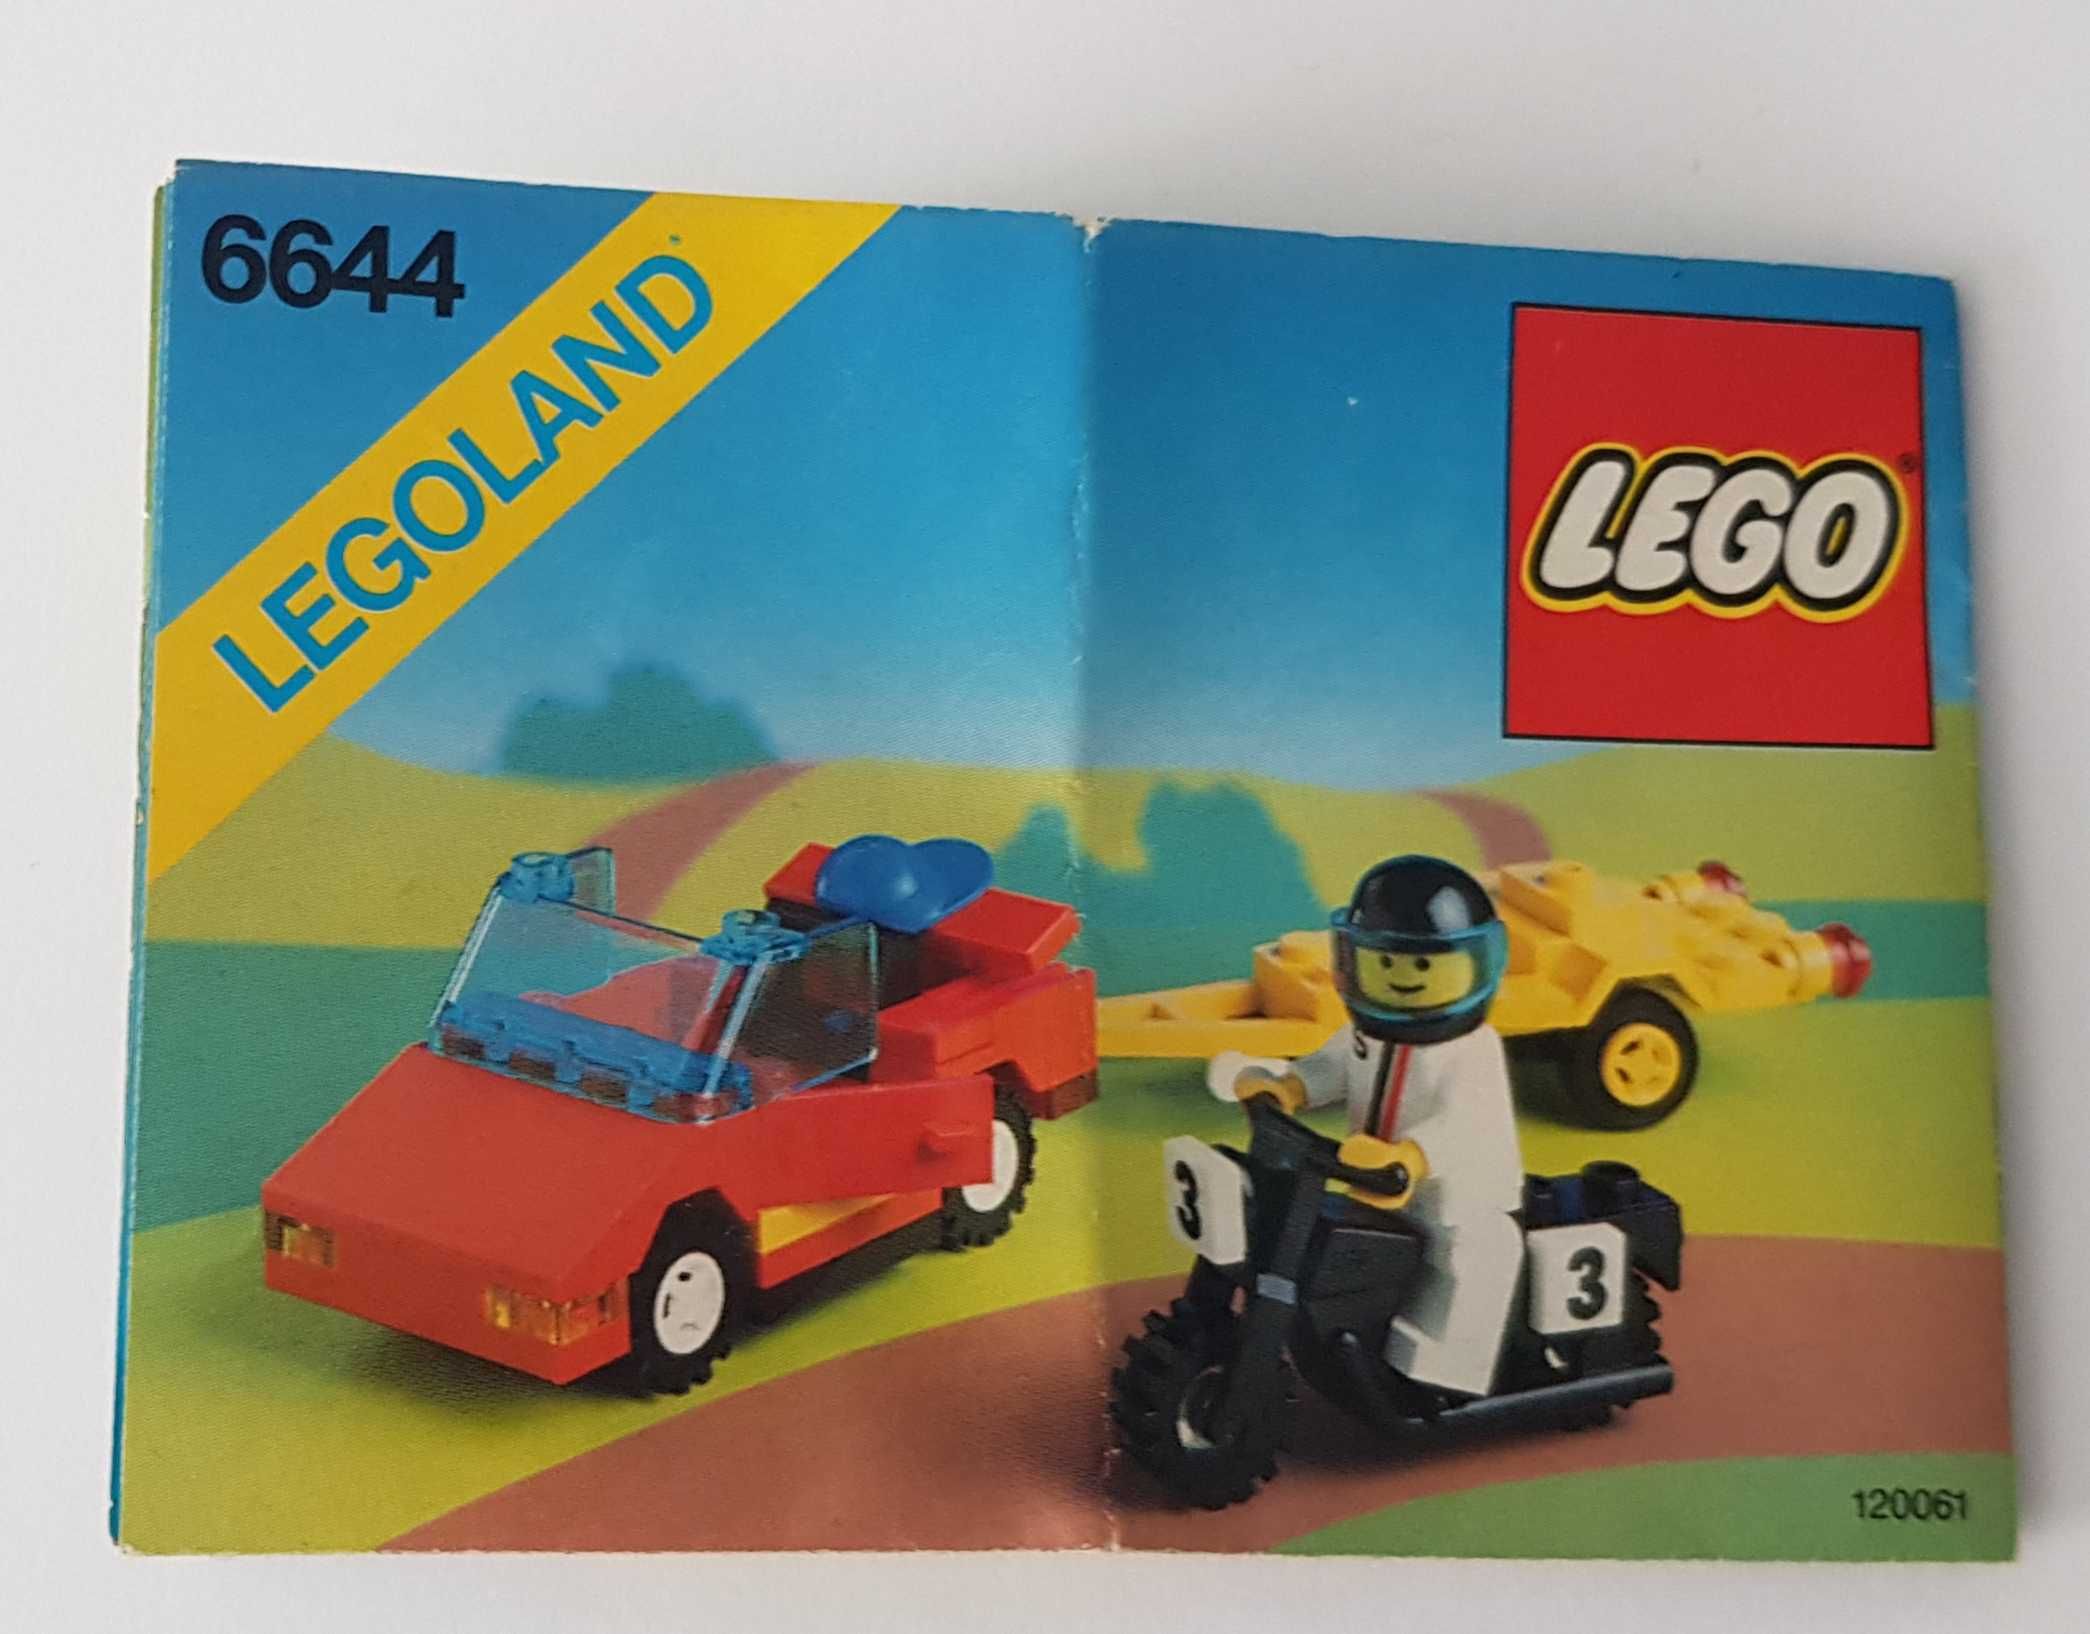 Lego Town Road Rebel 6644 pudełko+instrukcja